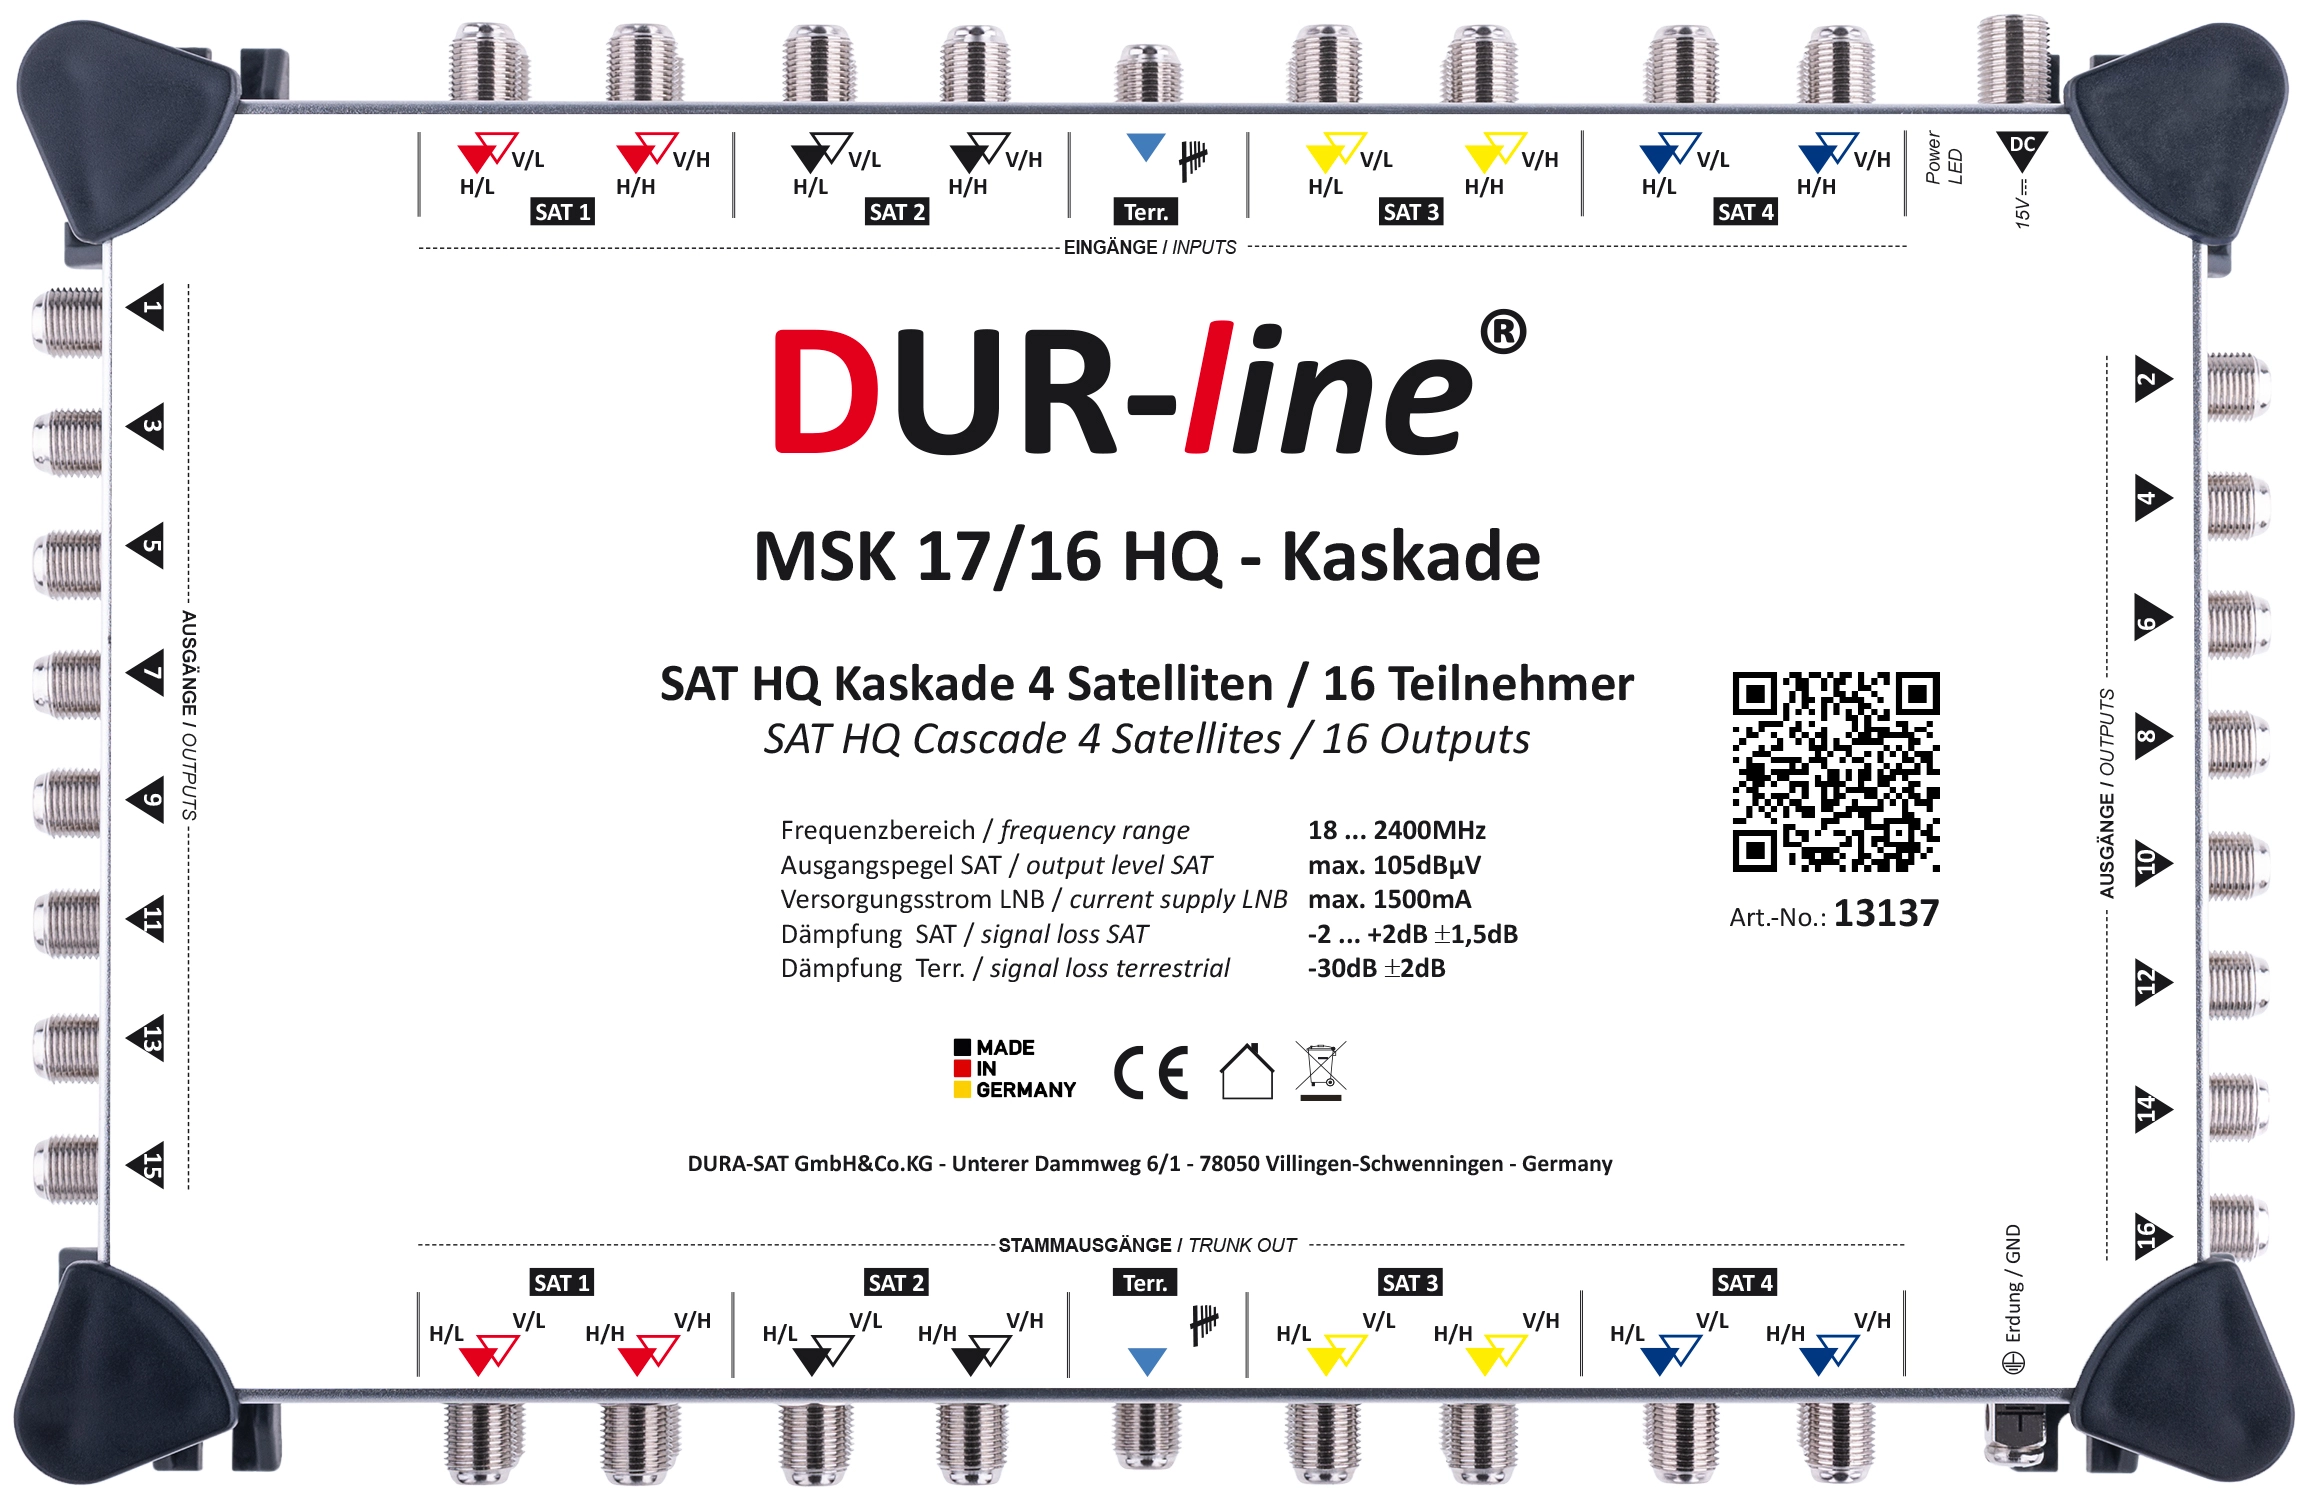 DUR-line MSK 17/16 HQ - Kaskade